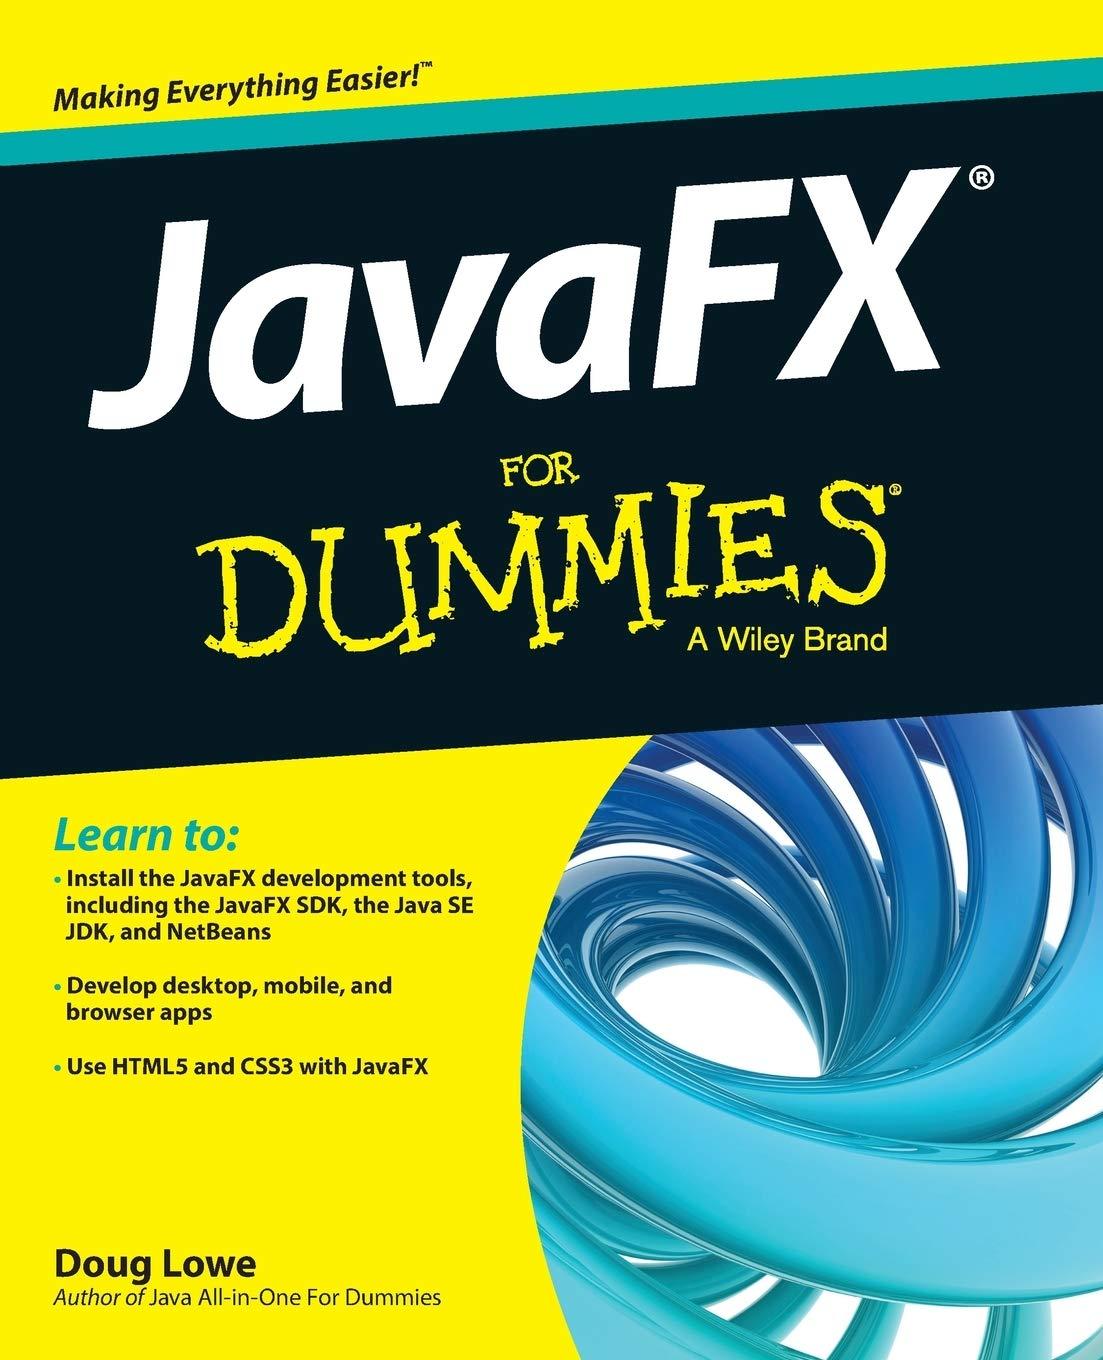 javafx for dummies 1st edition doug lowe 1118385349, 978-1118385340